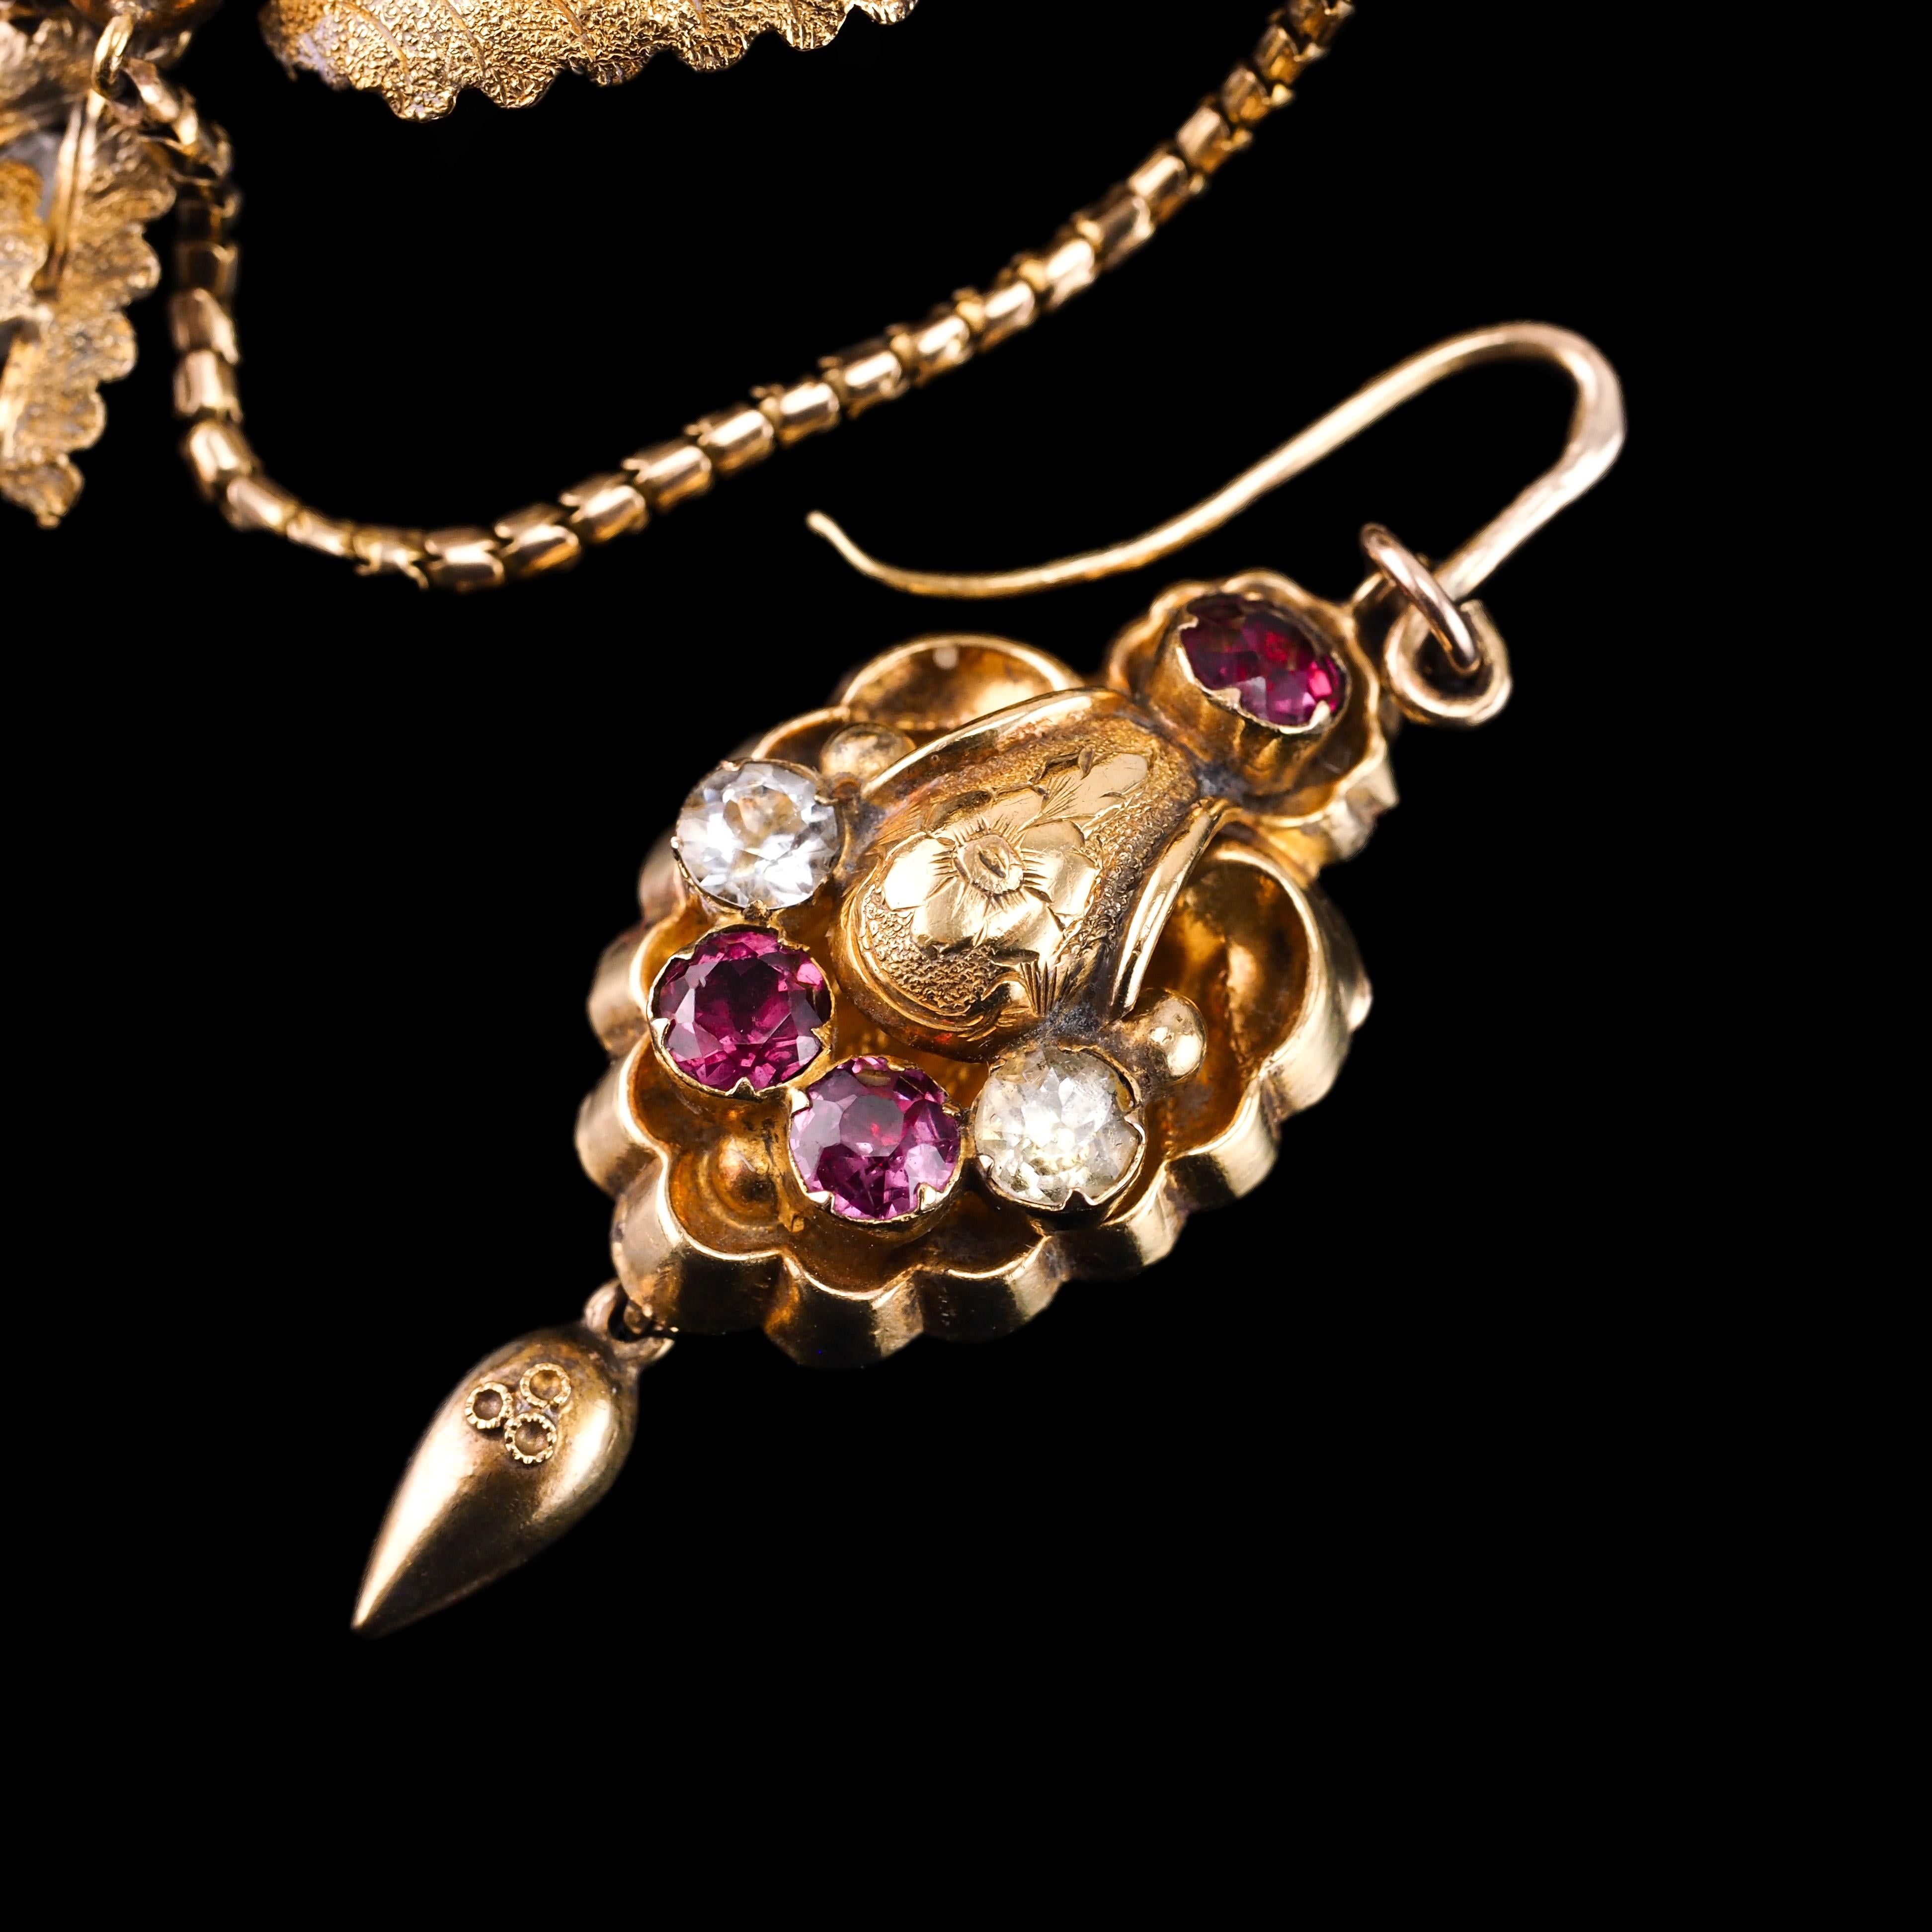 Antique 18K Gold Brooch Pendant & Earrings Garnet & Chrysoberyl - c.1870 11